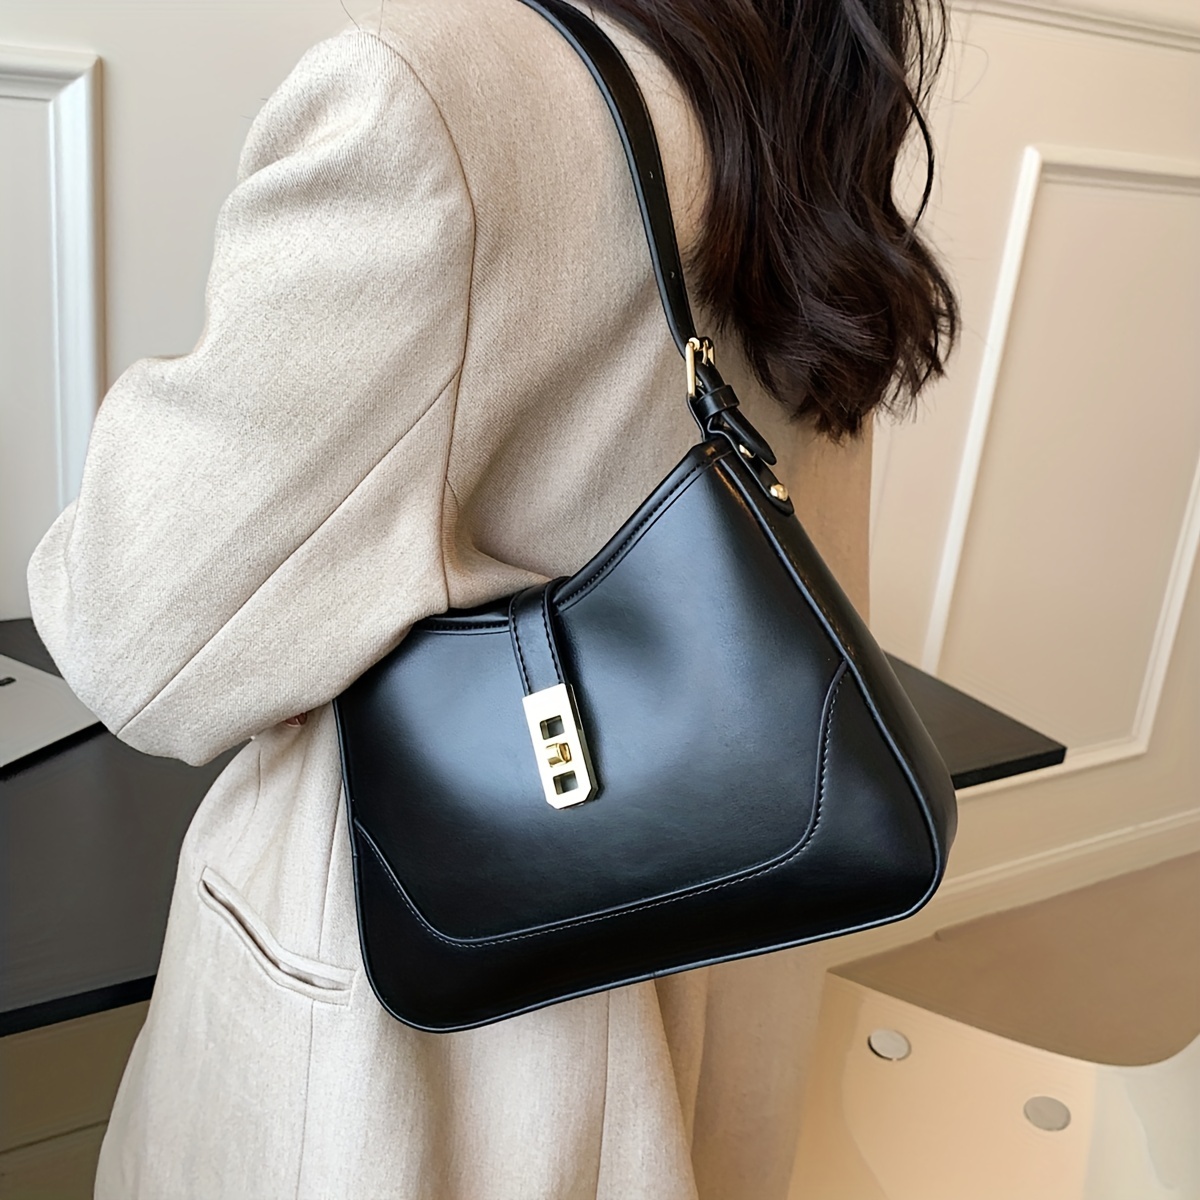 Fashionable & Simple Lock Buckle Handbag, Casual & Commuting Shoulder Bag